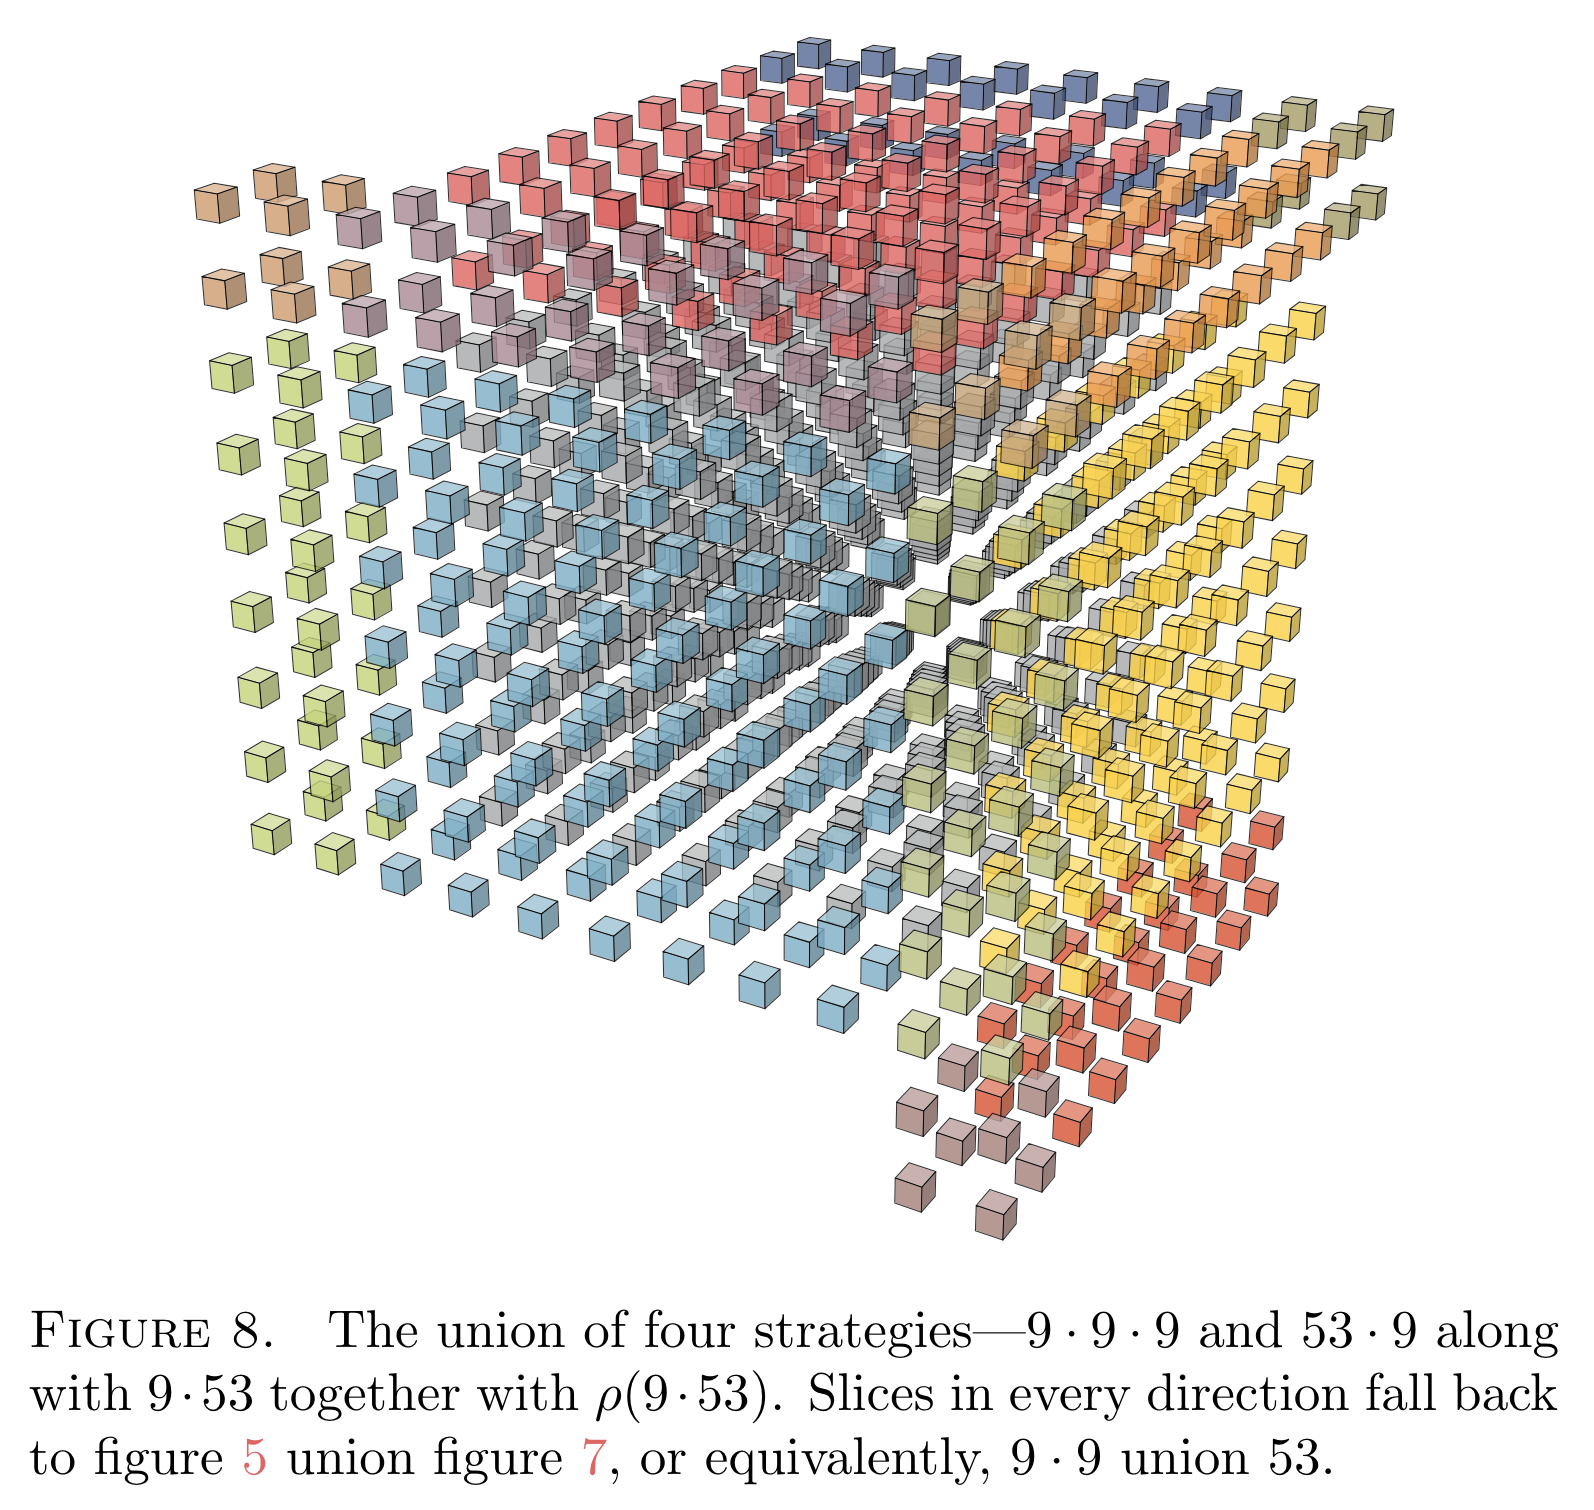 A 3-dimensional arraay of cubes, each representing a CPU core